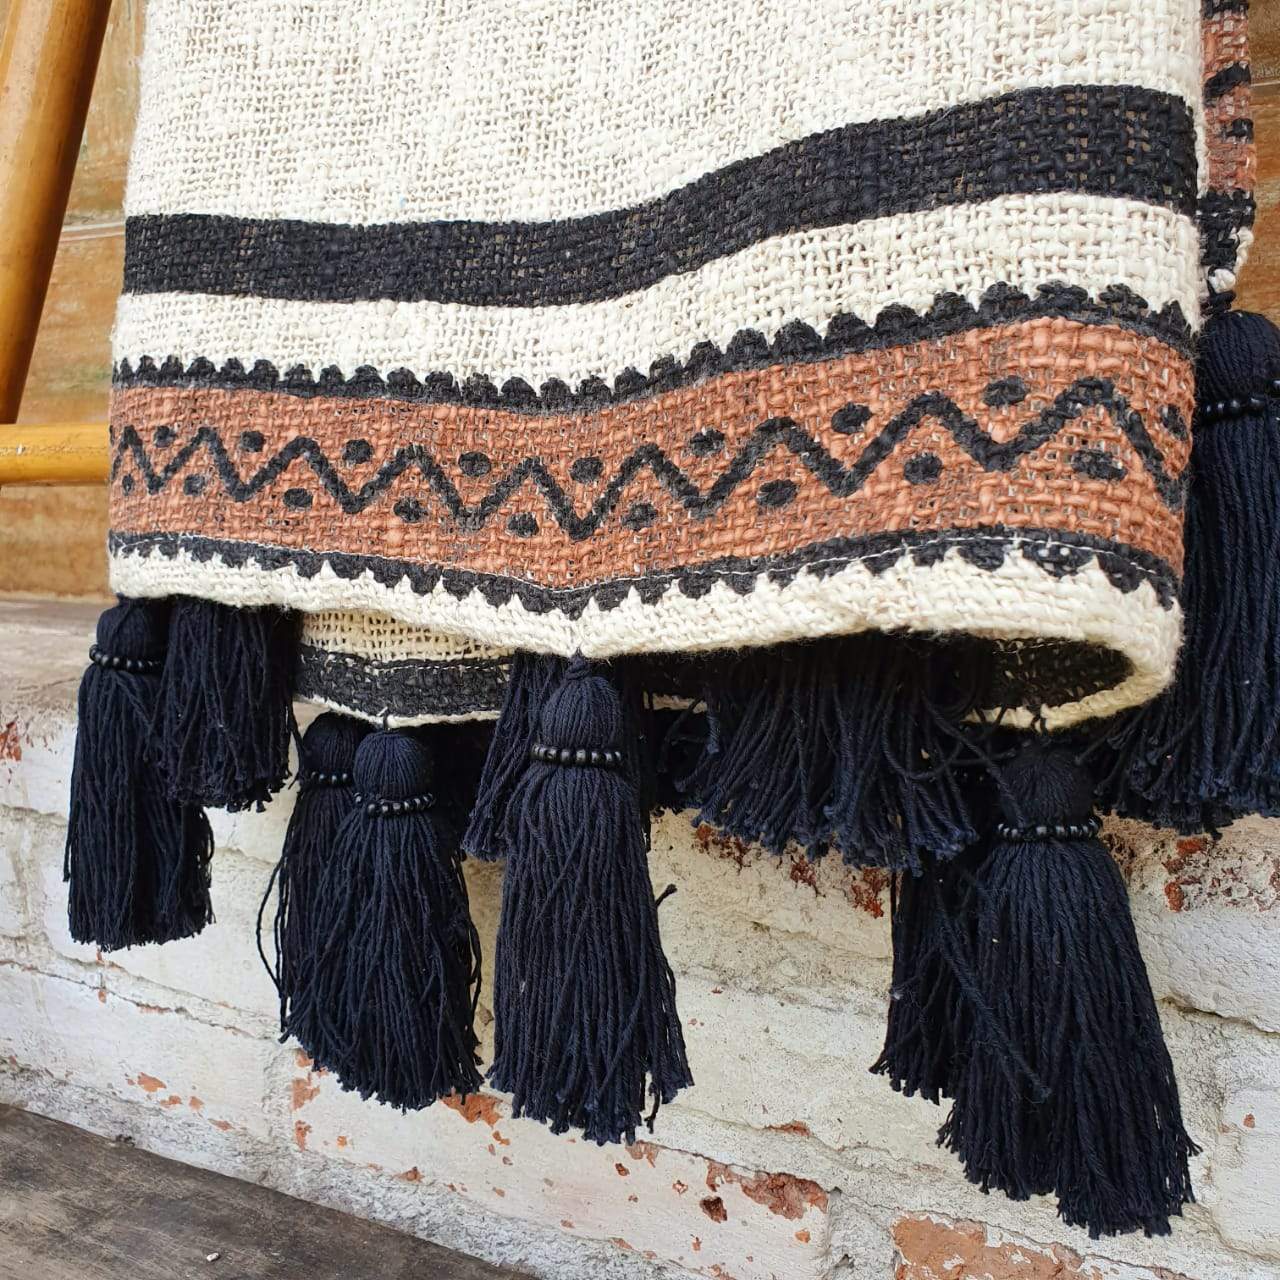 Tribal Throw Blanket With Beaded Tassels - bohemian-beach-house